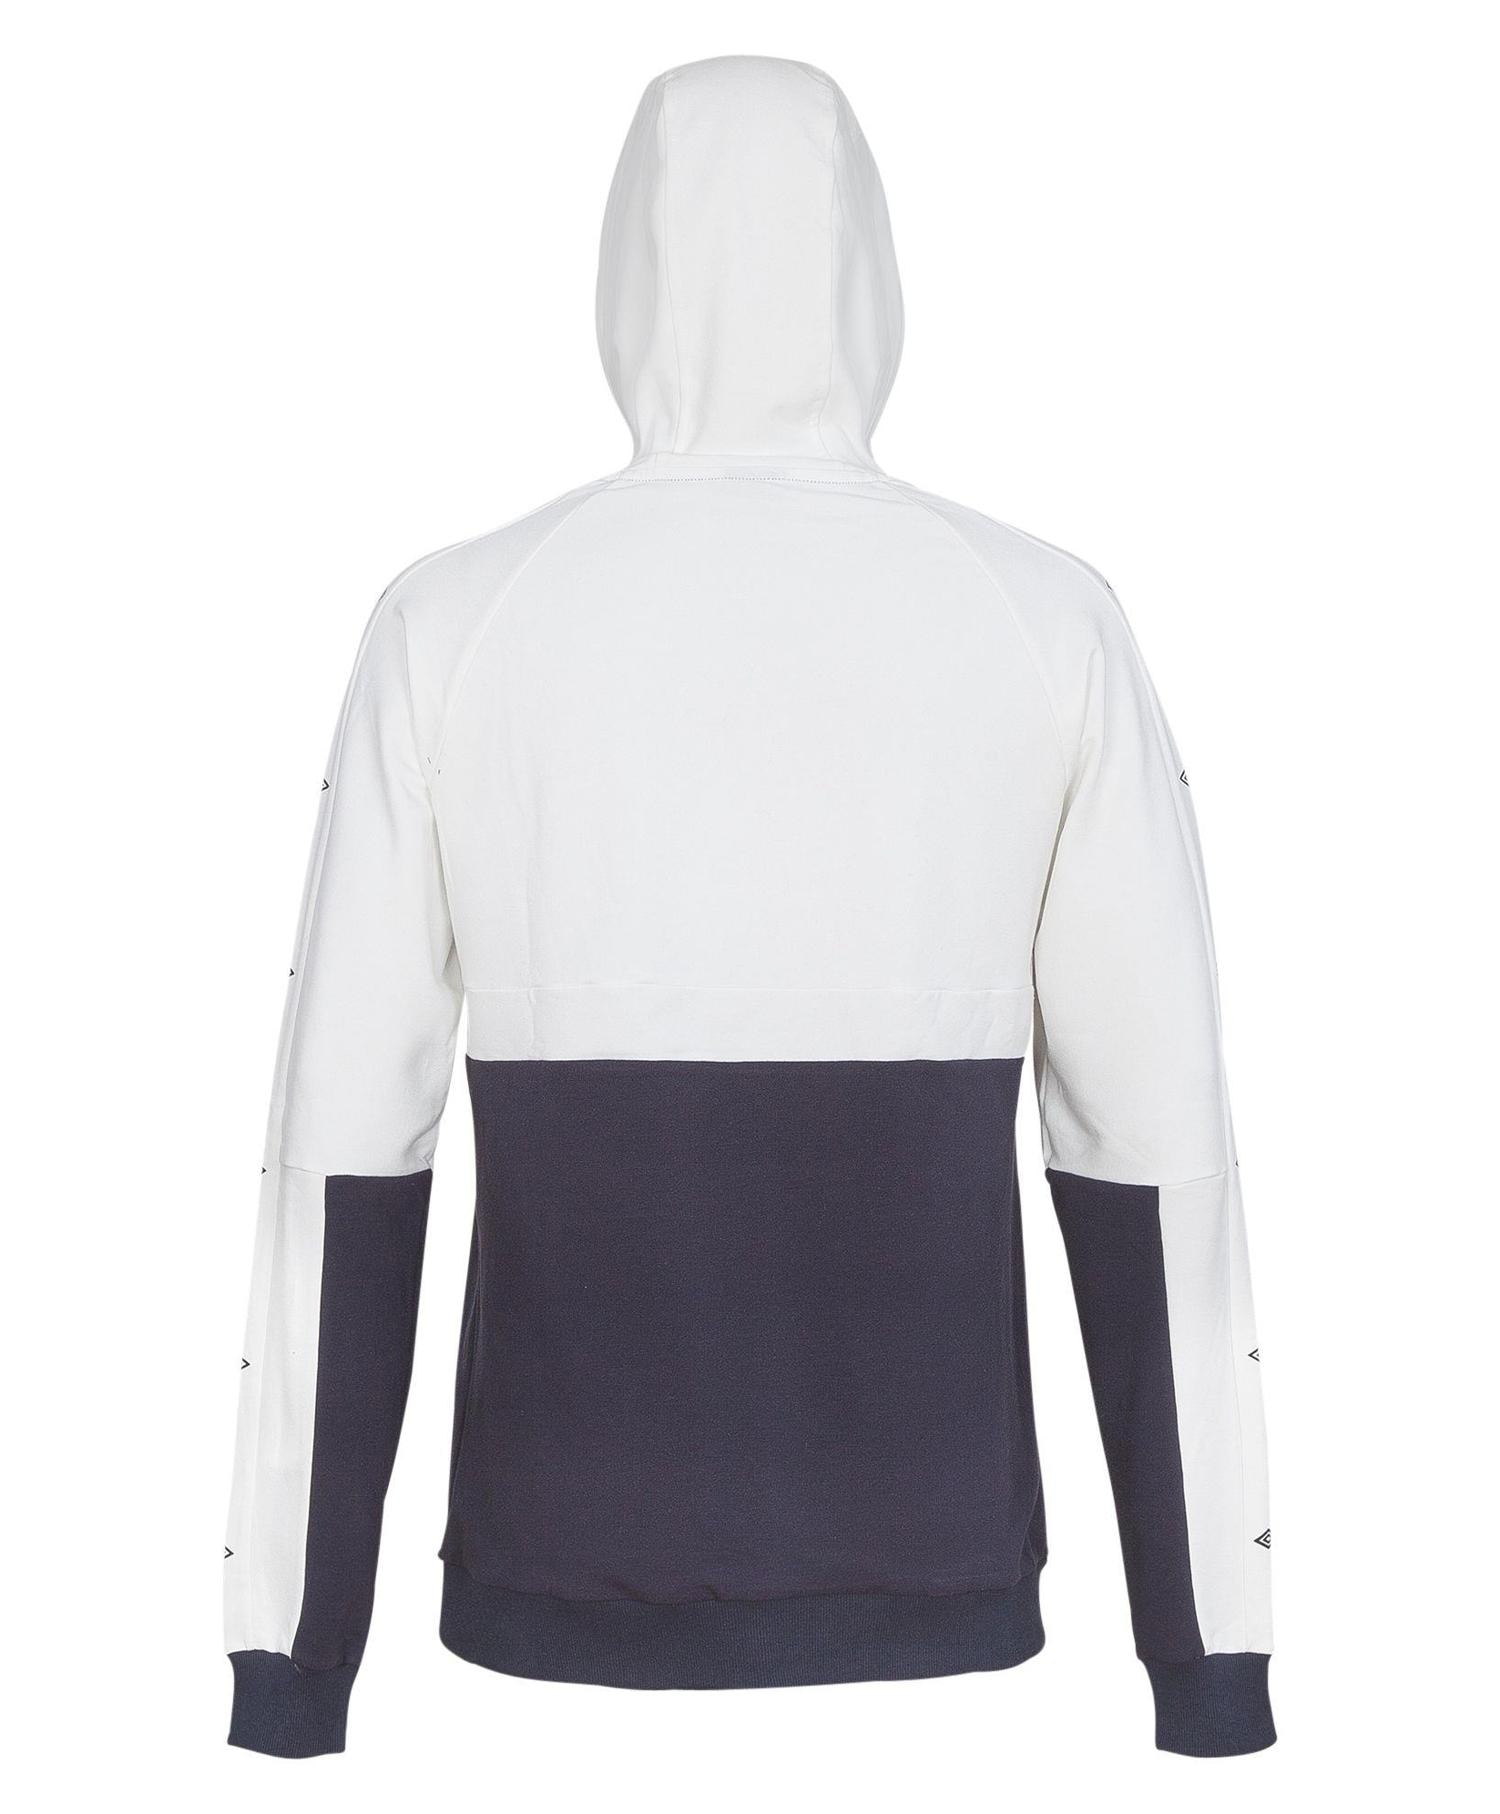 Umbro Core  X hoodie